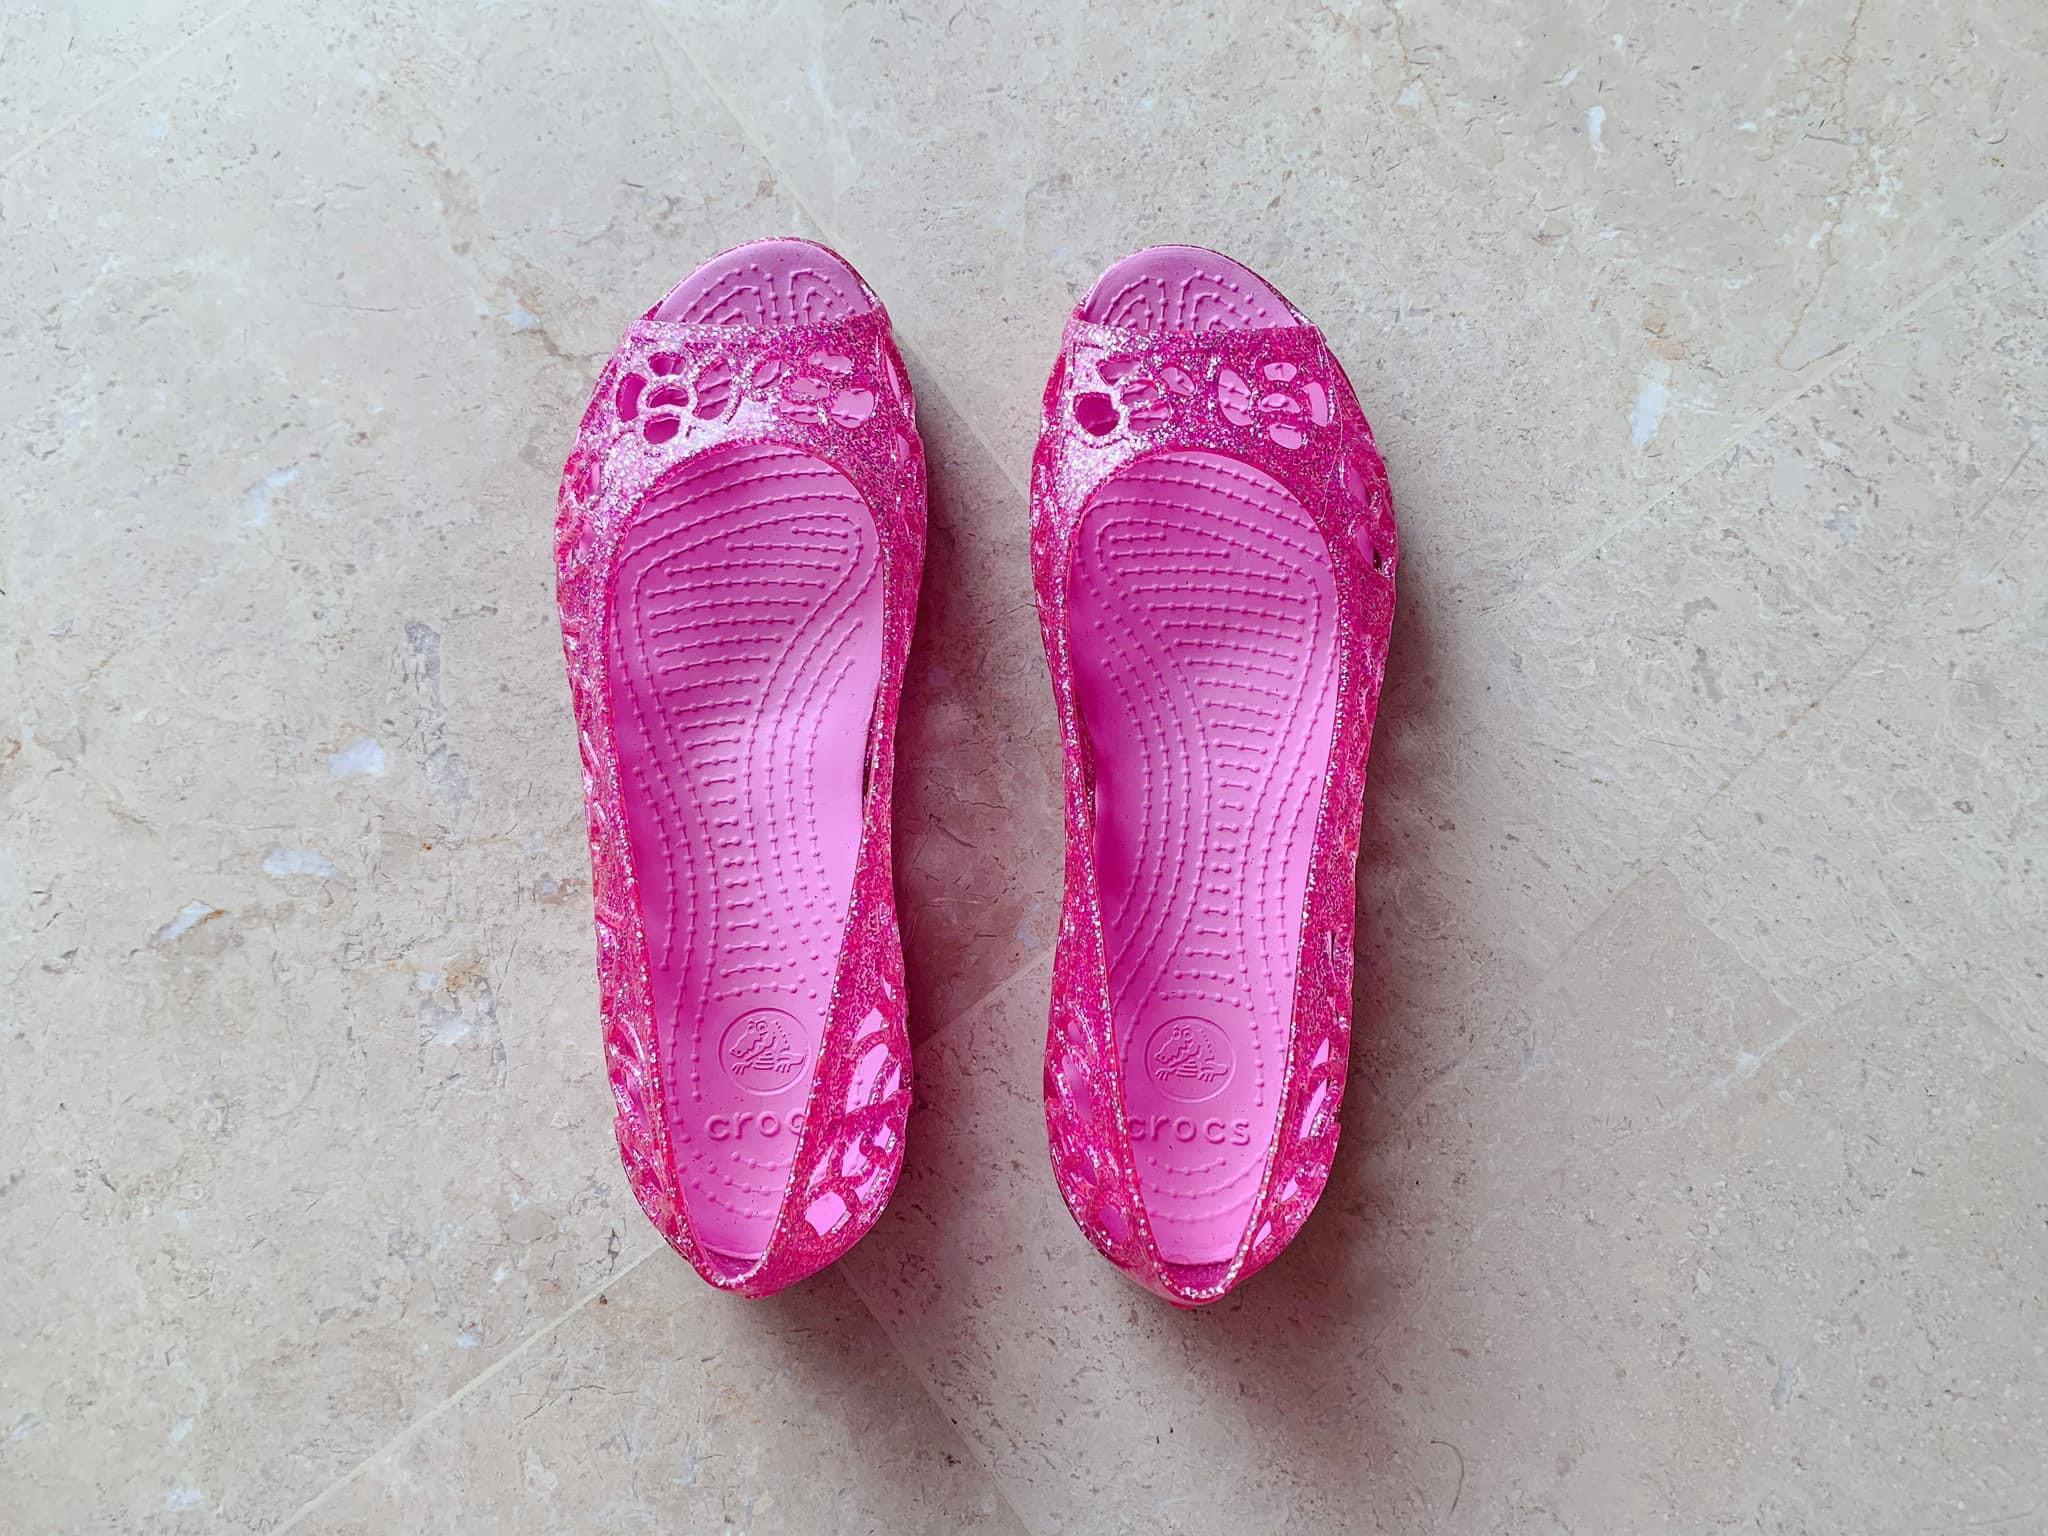 crocs shoes clearance